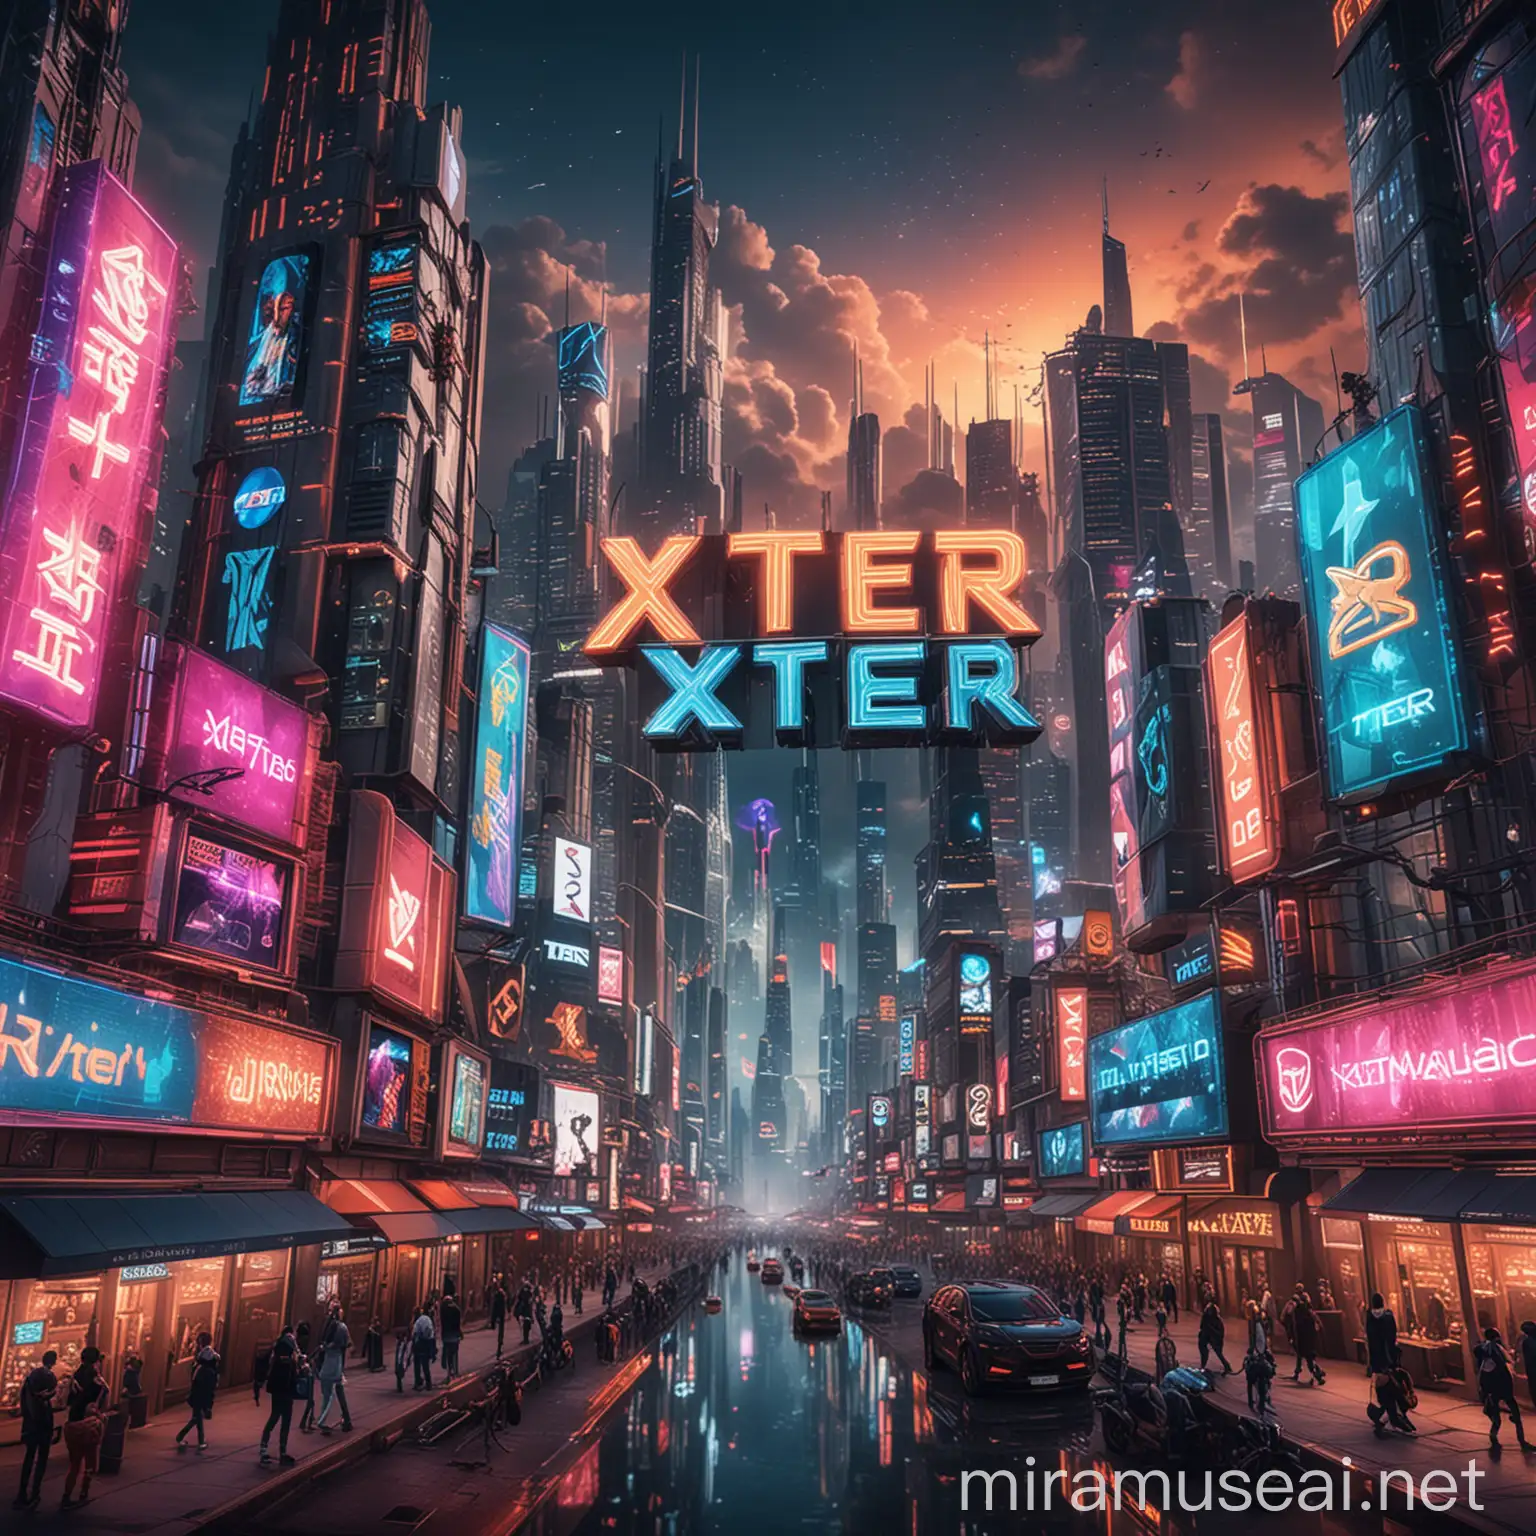 Immersive Gaming in XTER City Digital Avatars Amidst Futuristic Skyscrapers